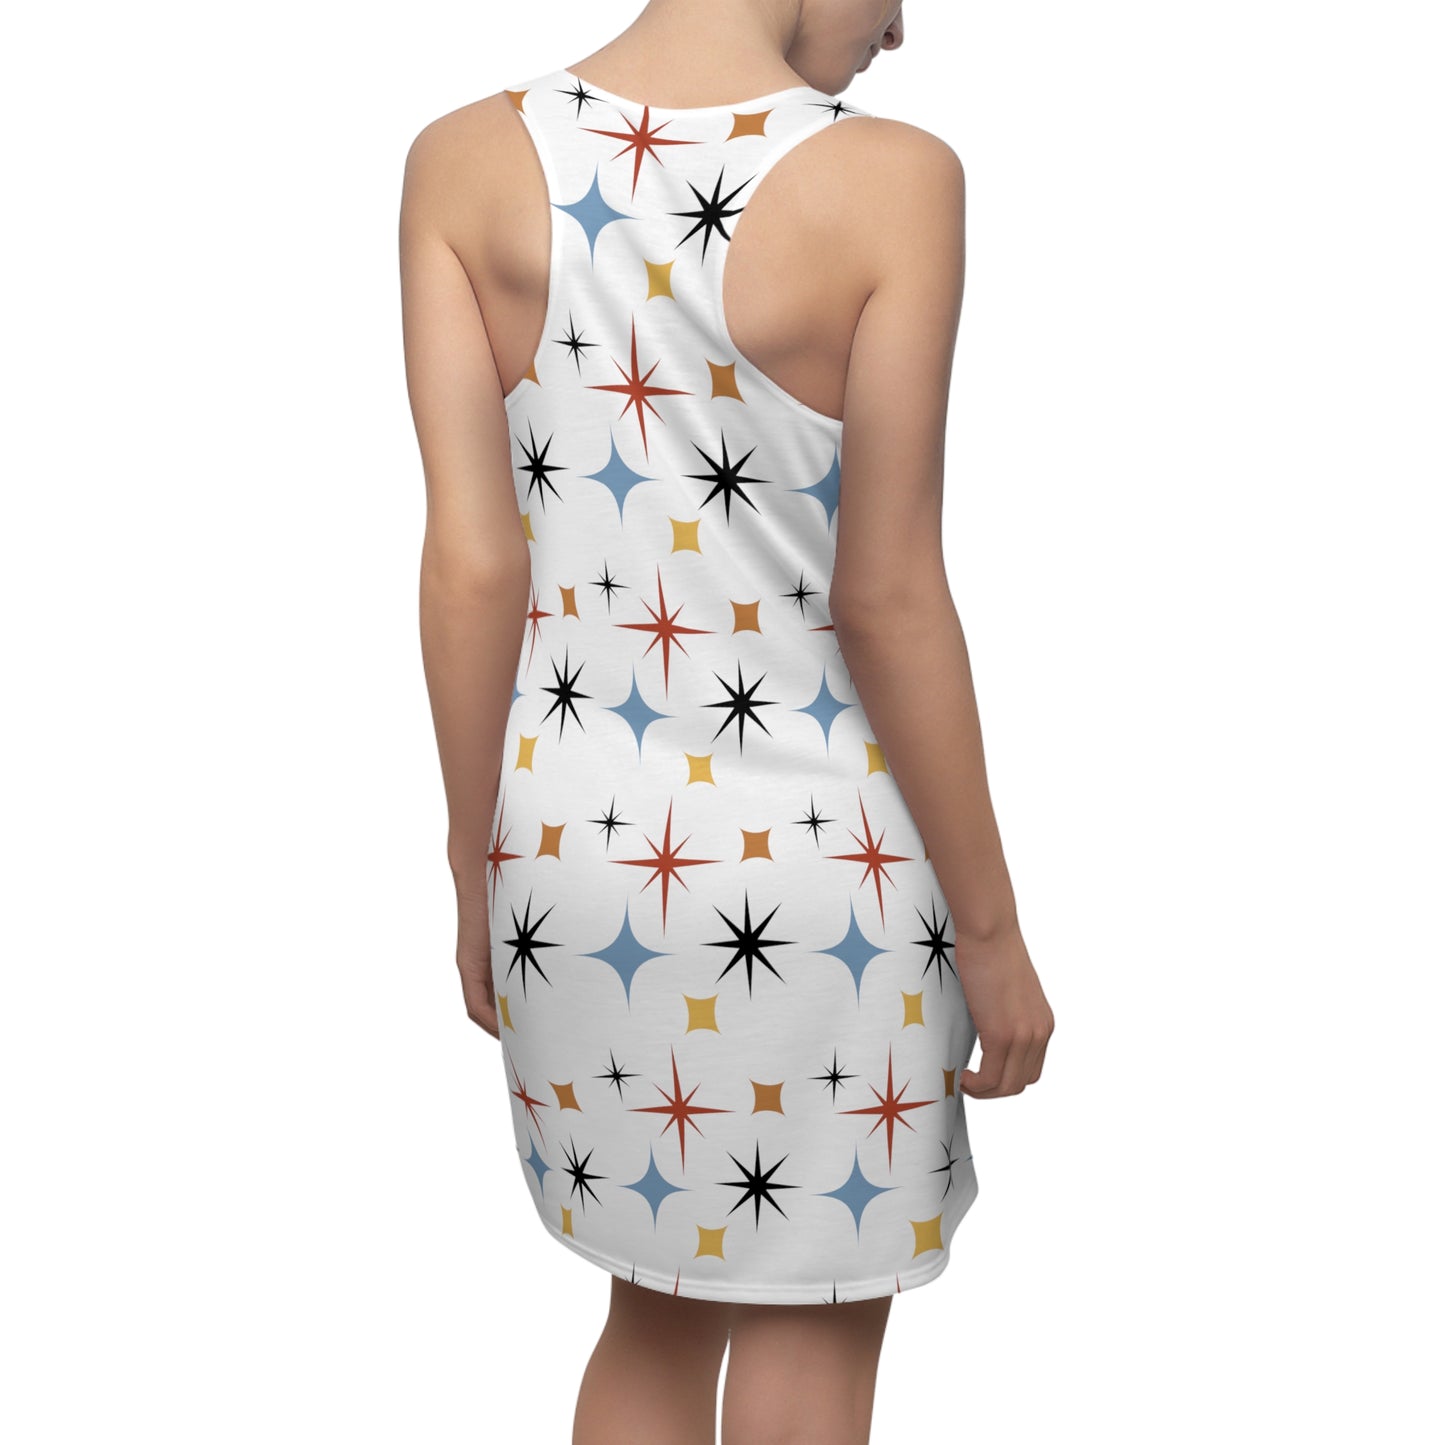 "Starburst" Racerback Dress